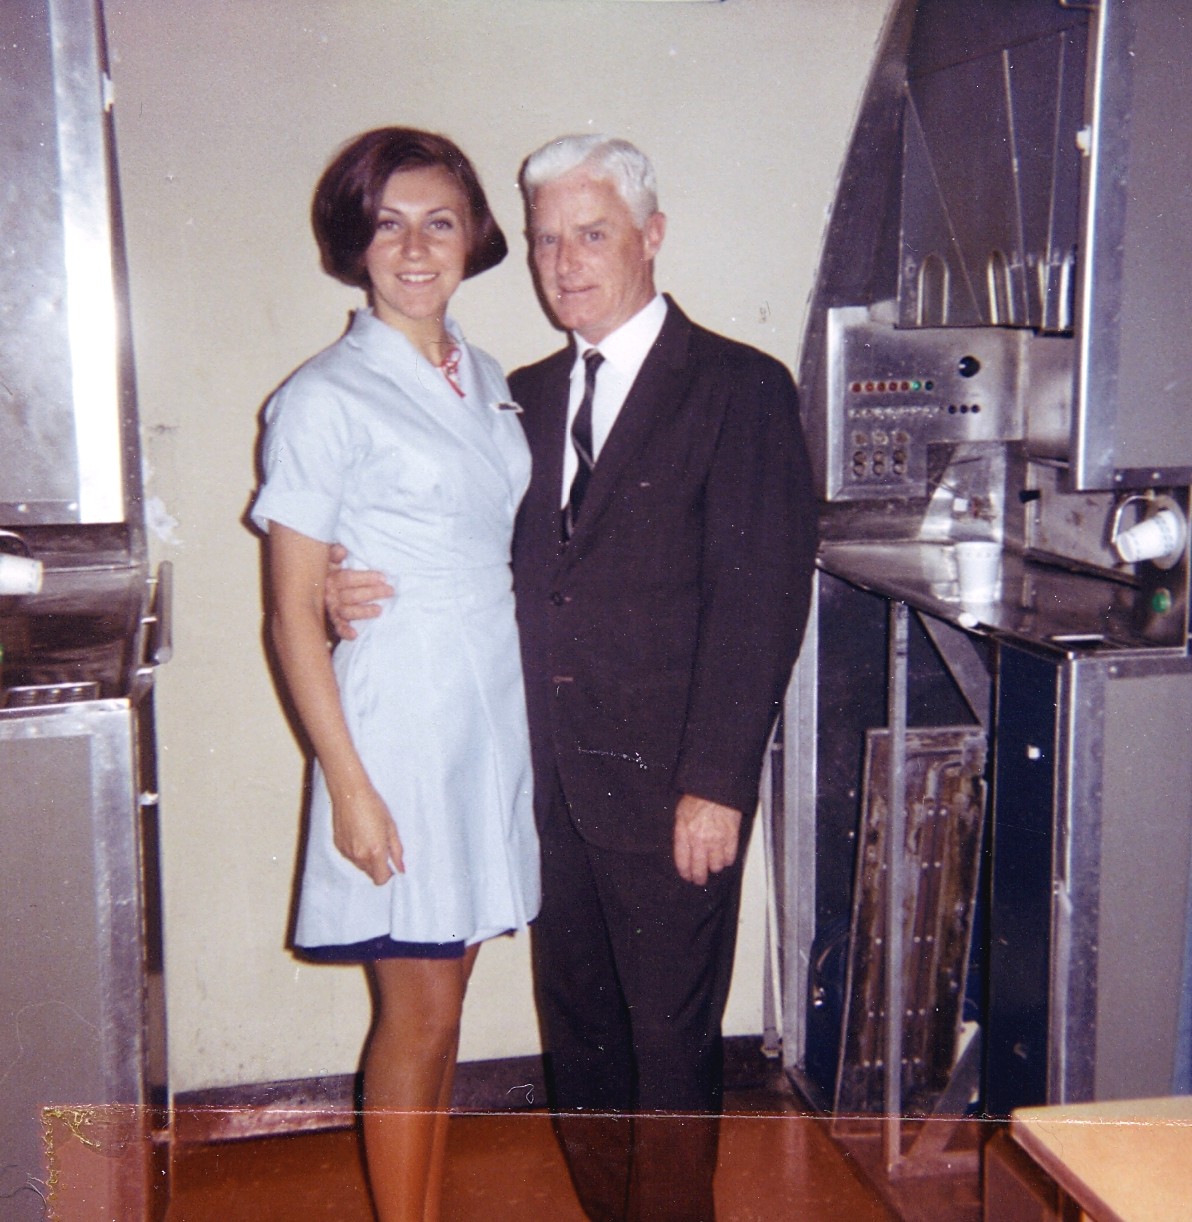 1968 April, Maureen van Leeuwen poses with John Kelly, Senior Instructor, Dining Services